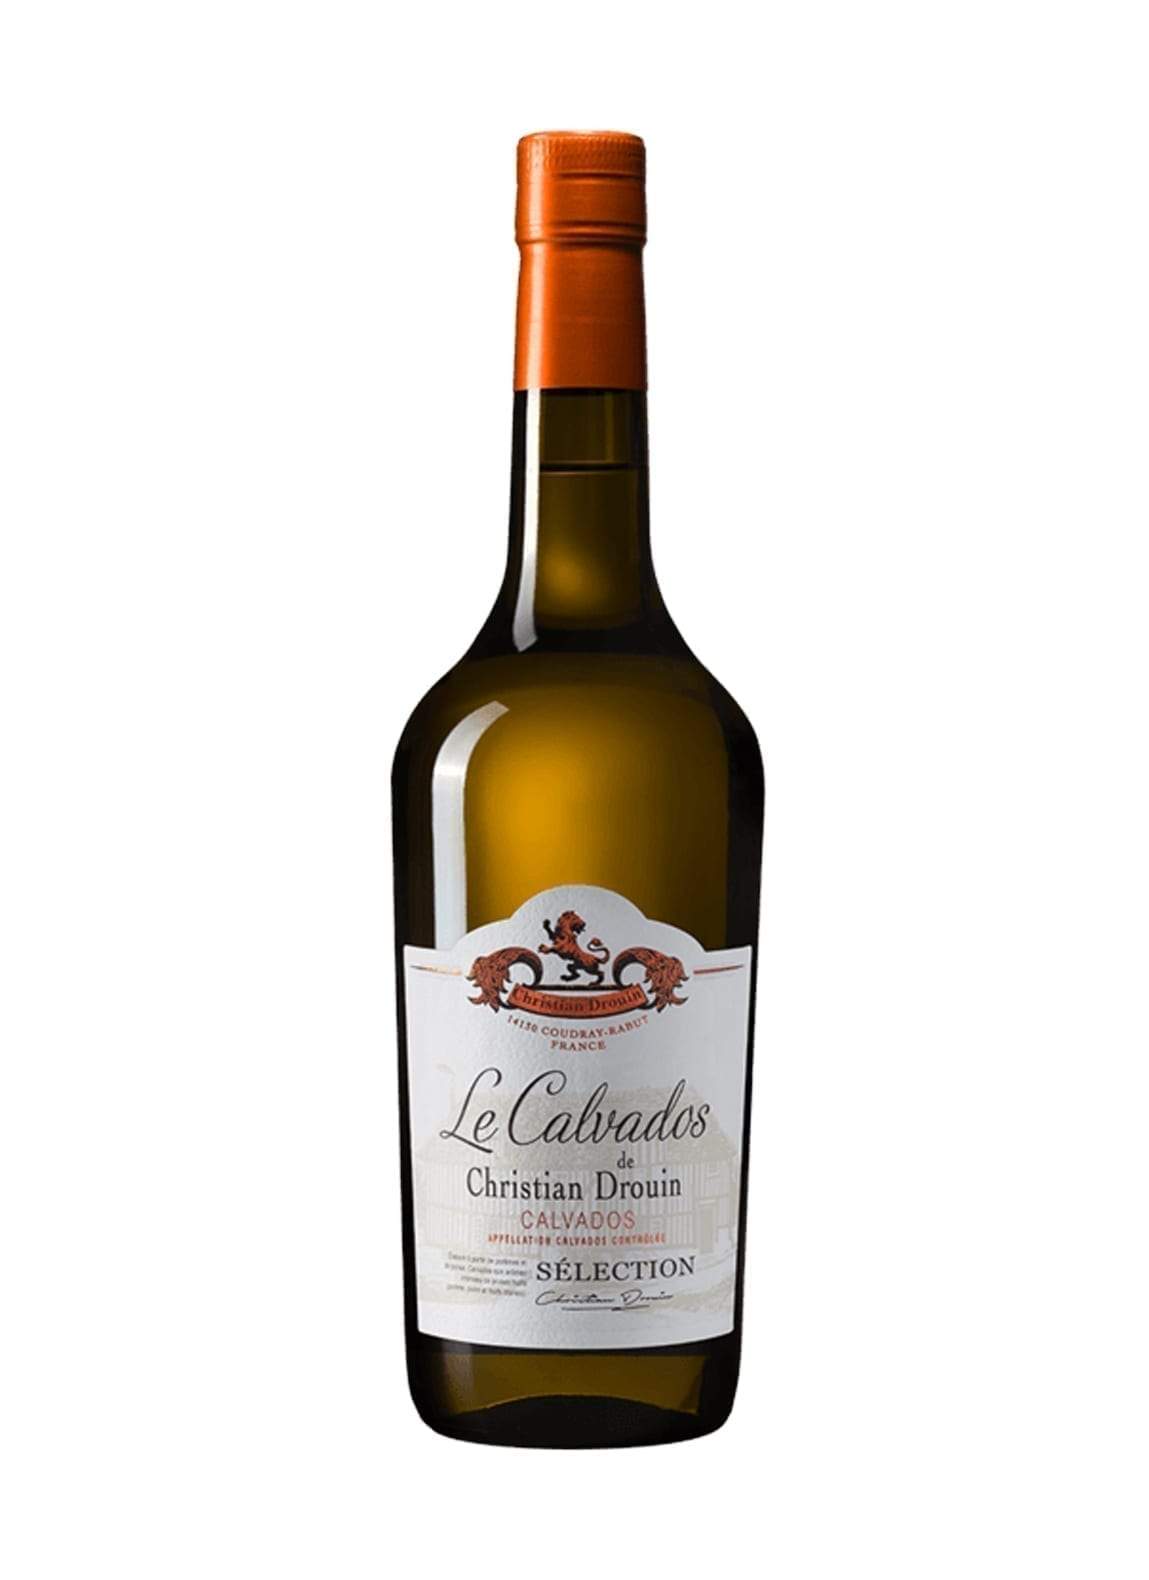 Christian Drouin Sélection Calvados 40% 700ml | Brandy | Shop online at Spirits of France